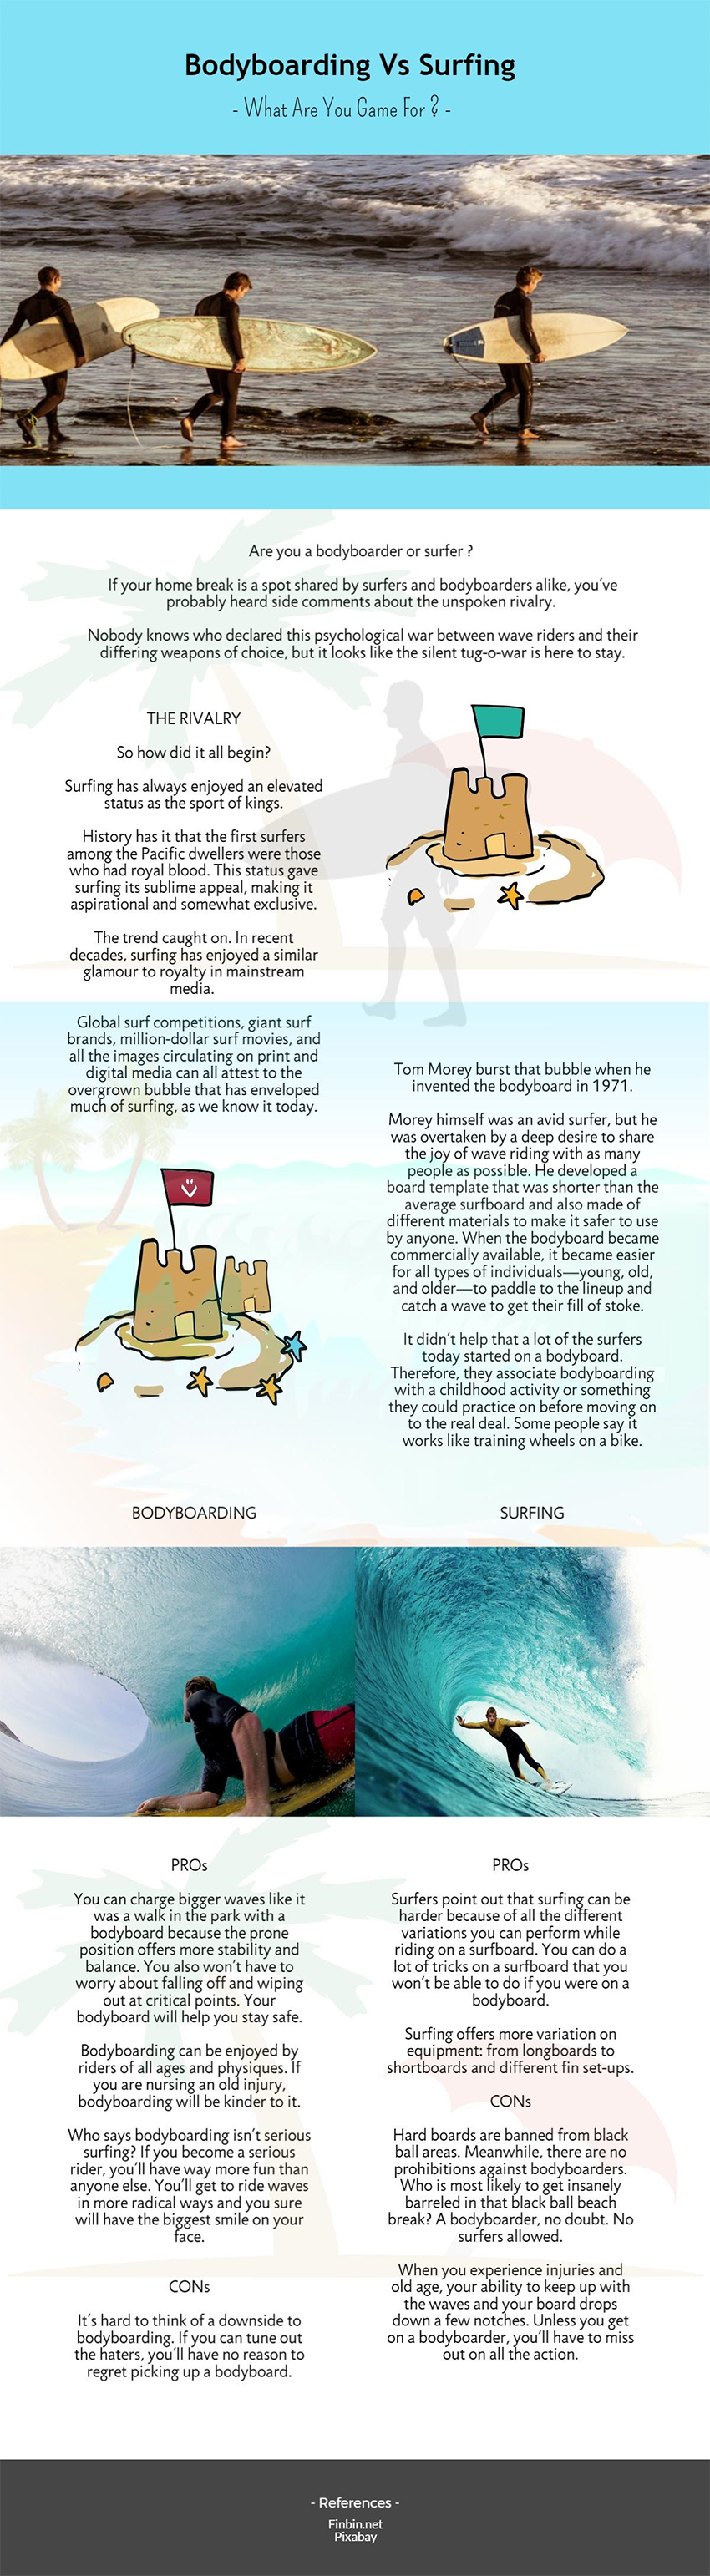 Bodyboarding vs Surfing infographic